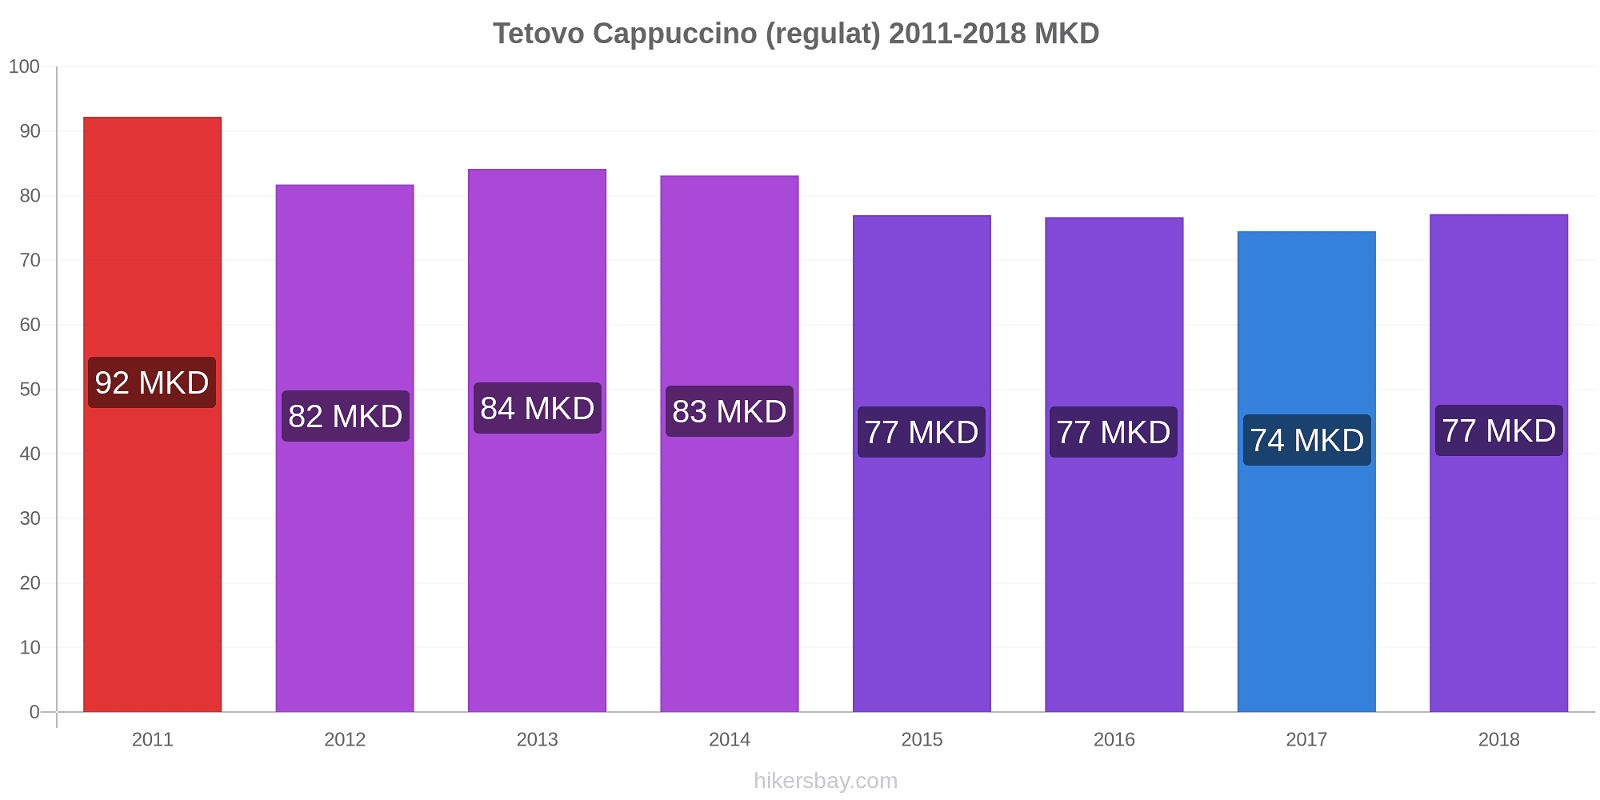 Tetovo modificări de preț Cappuccino (regulat) hikersbay.com